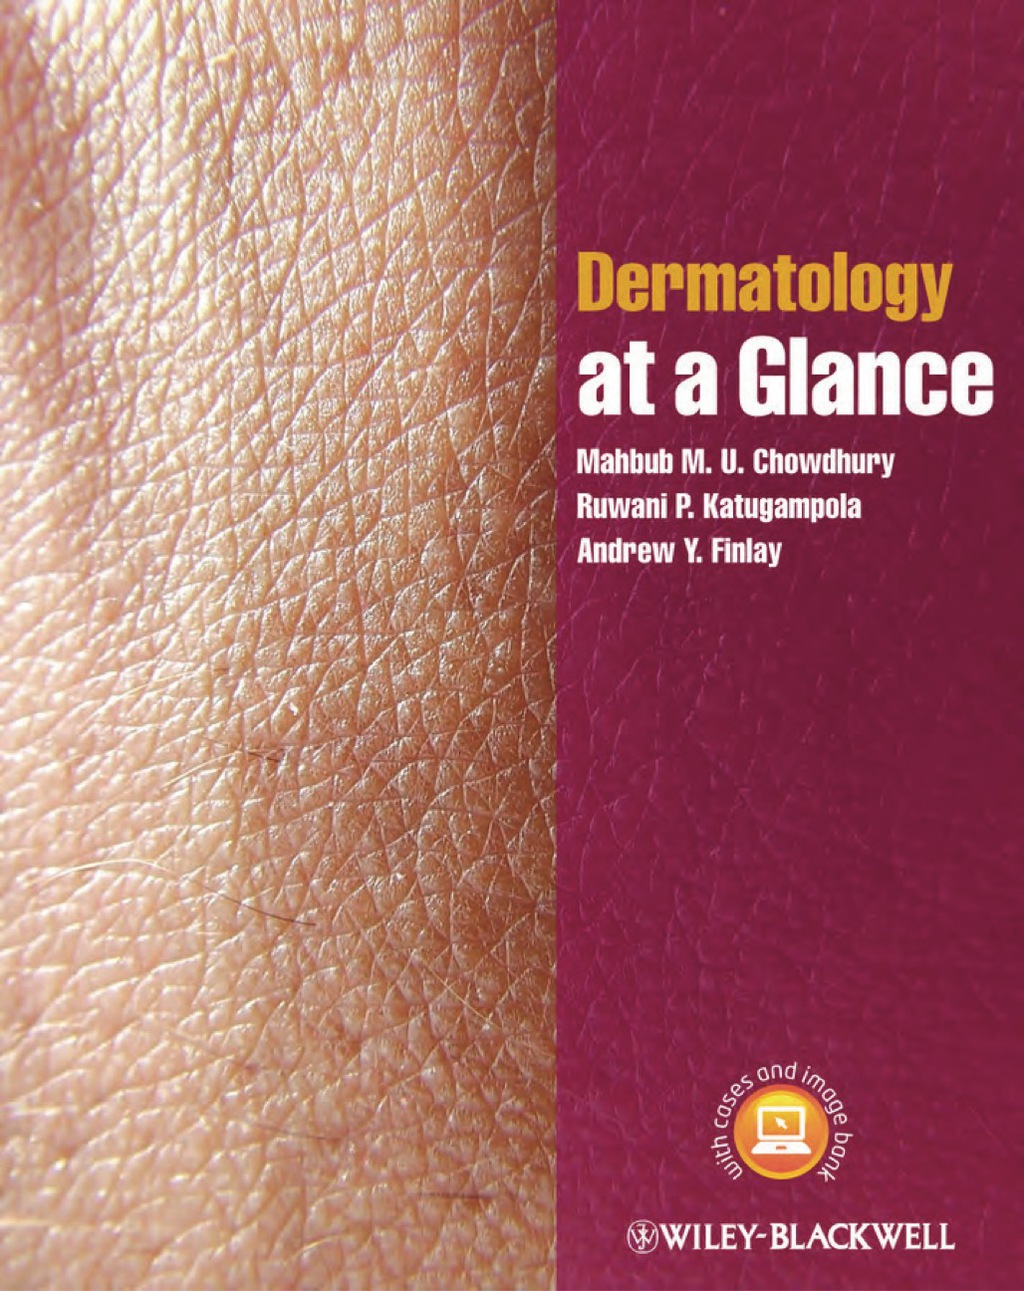 Dermatology at a Glance (eBook) - Mahbub M. U. Chowdhury; Ruwani P. Katugampola; Andrew Y. Finlay